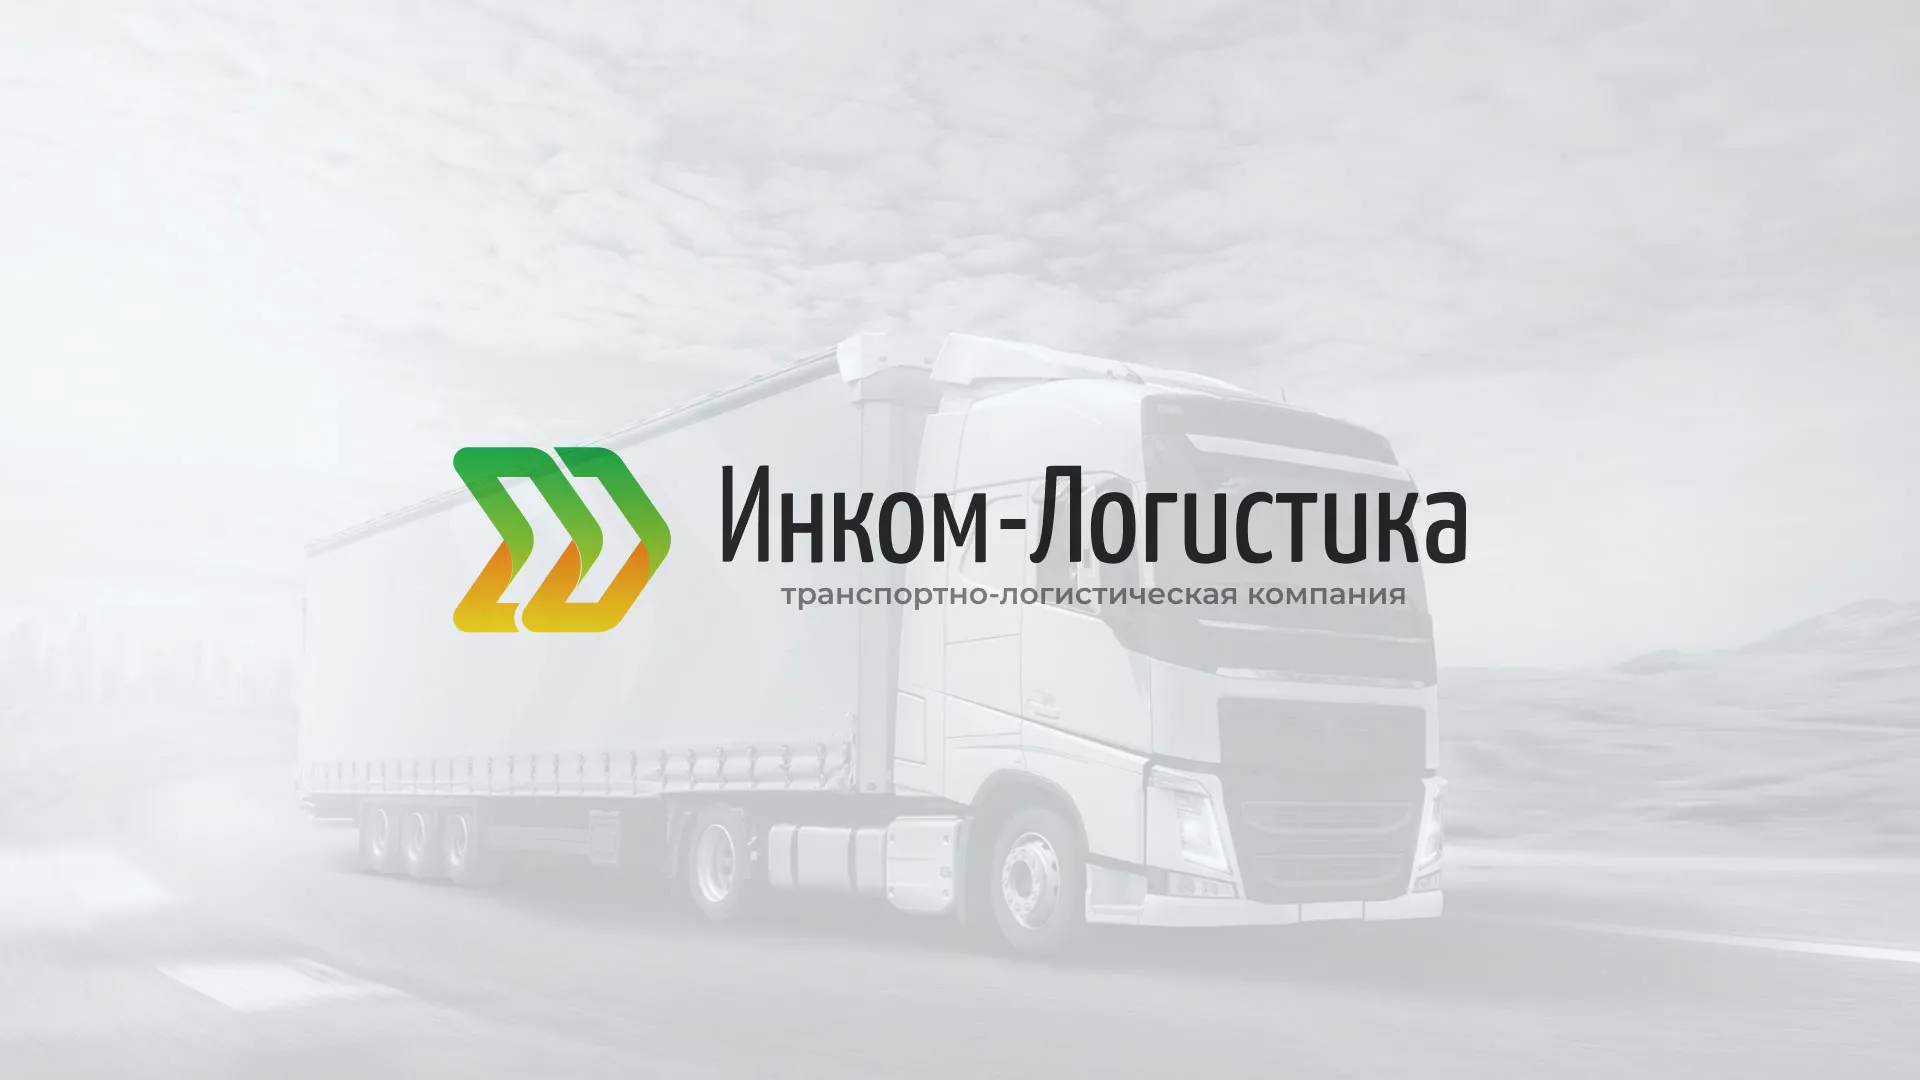 Разработка логотипа и сайта компании «Инком-Логистика» в Ханты-Мансийске